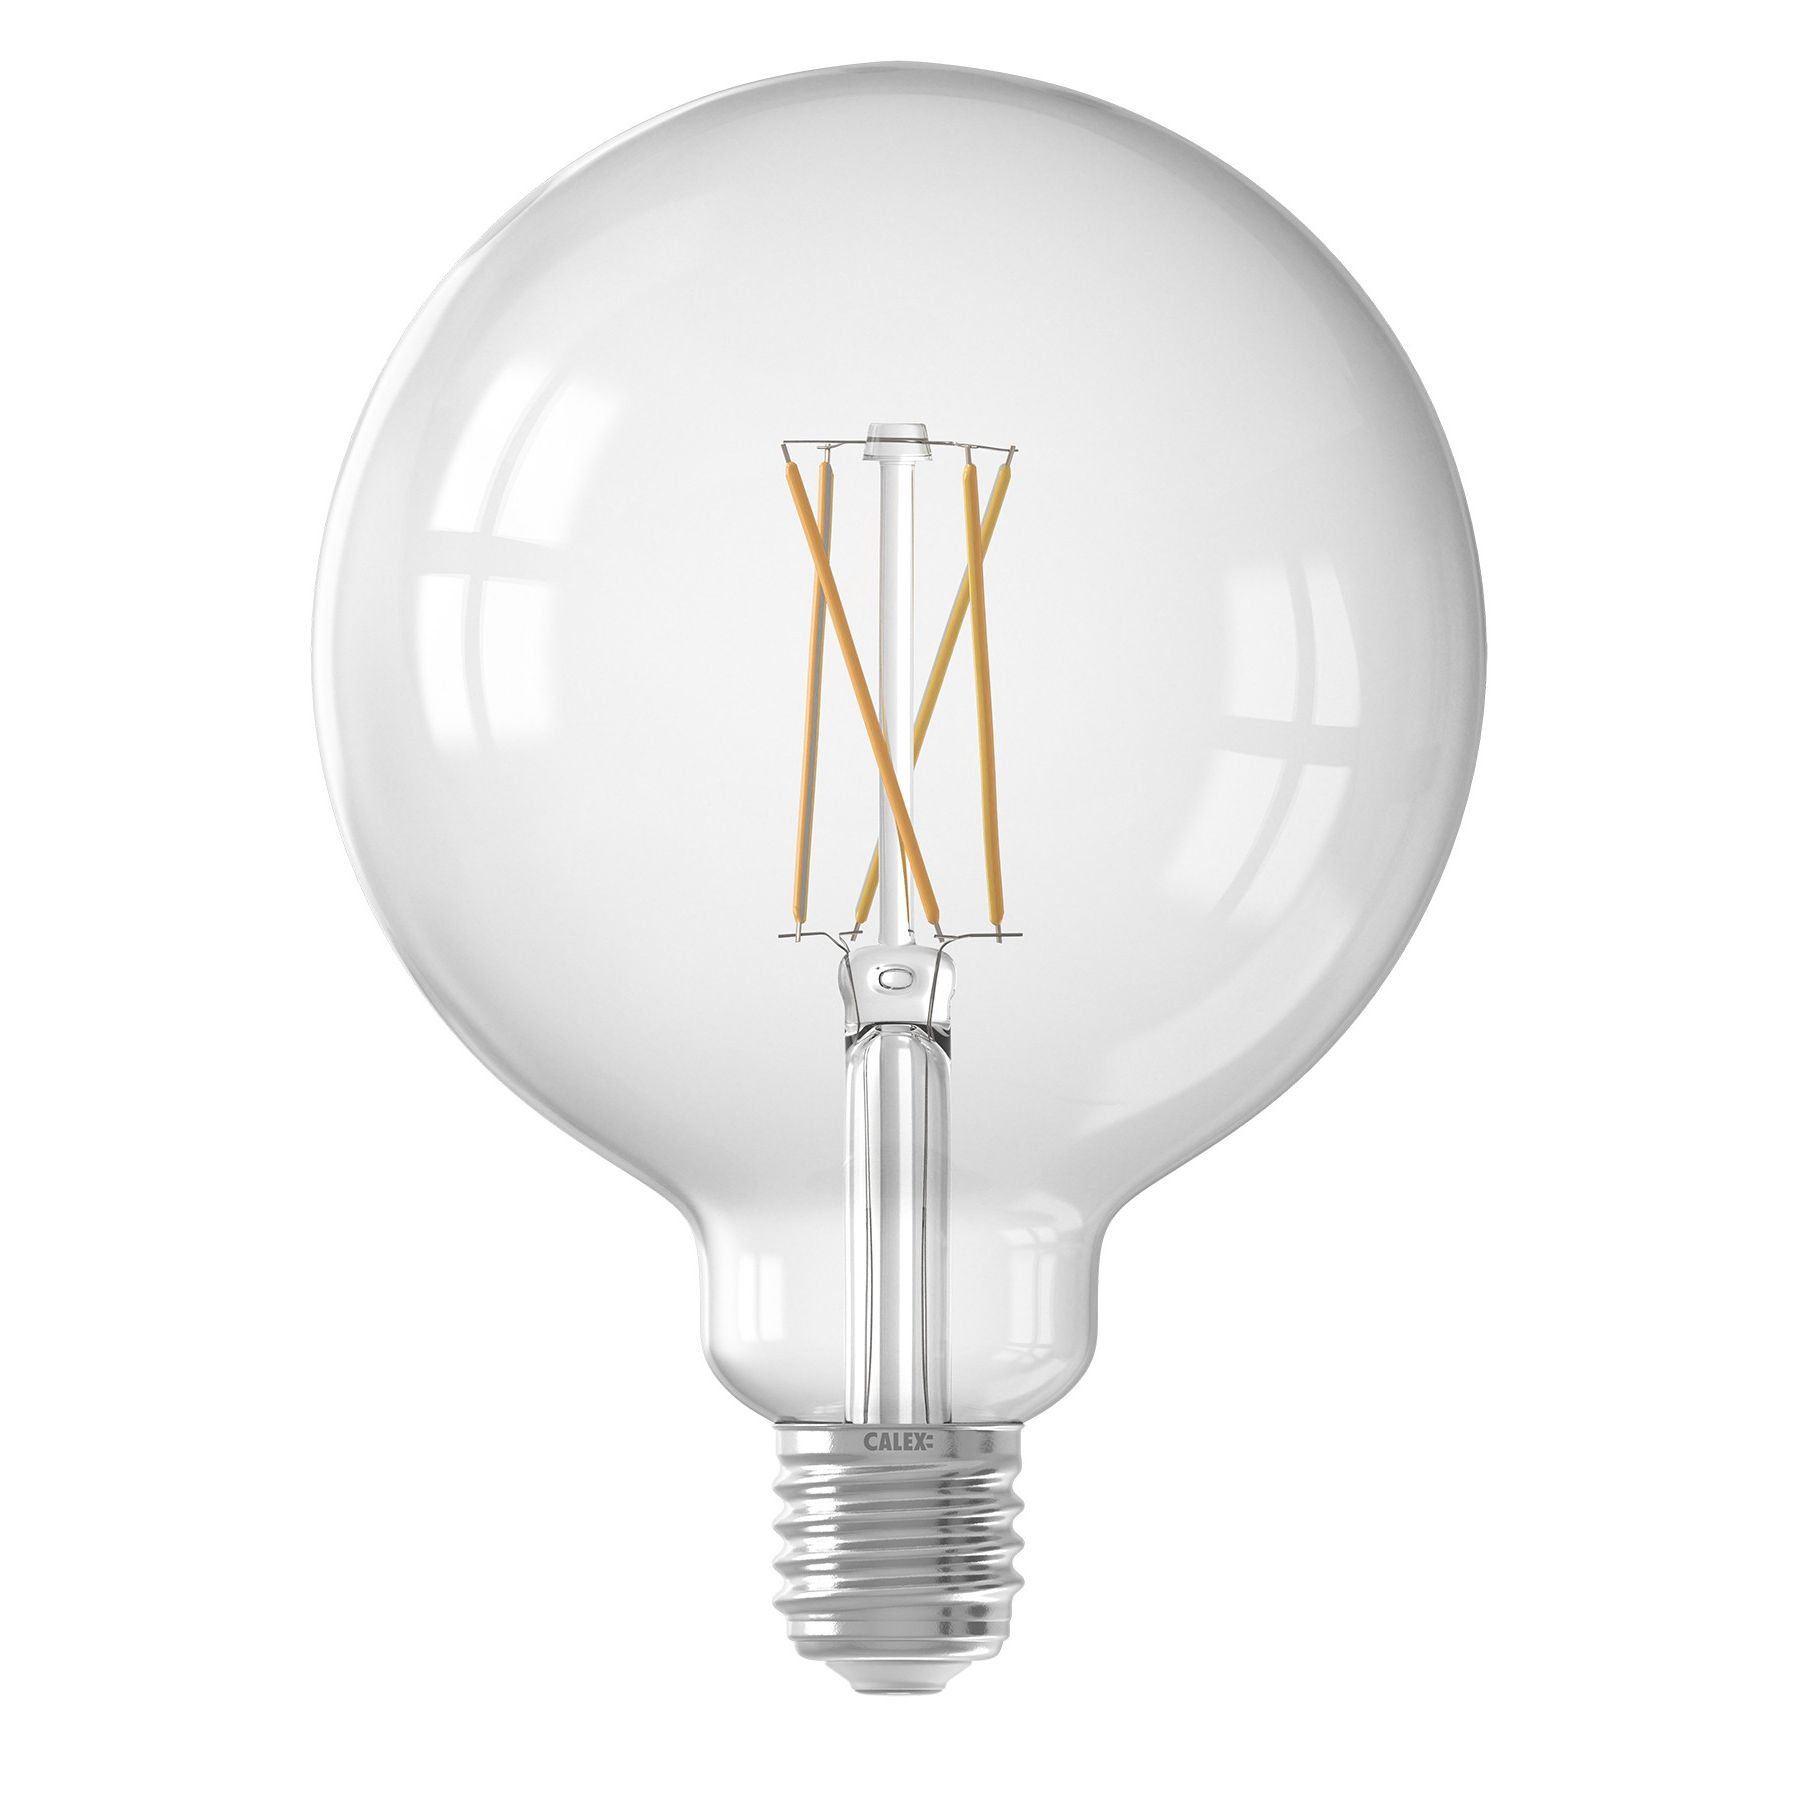 Calex Smart LED lamp - Ø 12,5 x 17,8 cm - - 7,5W - via app - tot 3000K - white ambiance | Lichtkoning